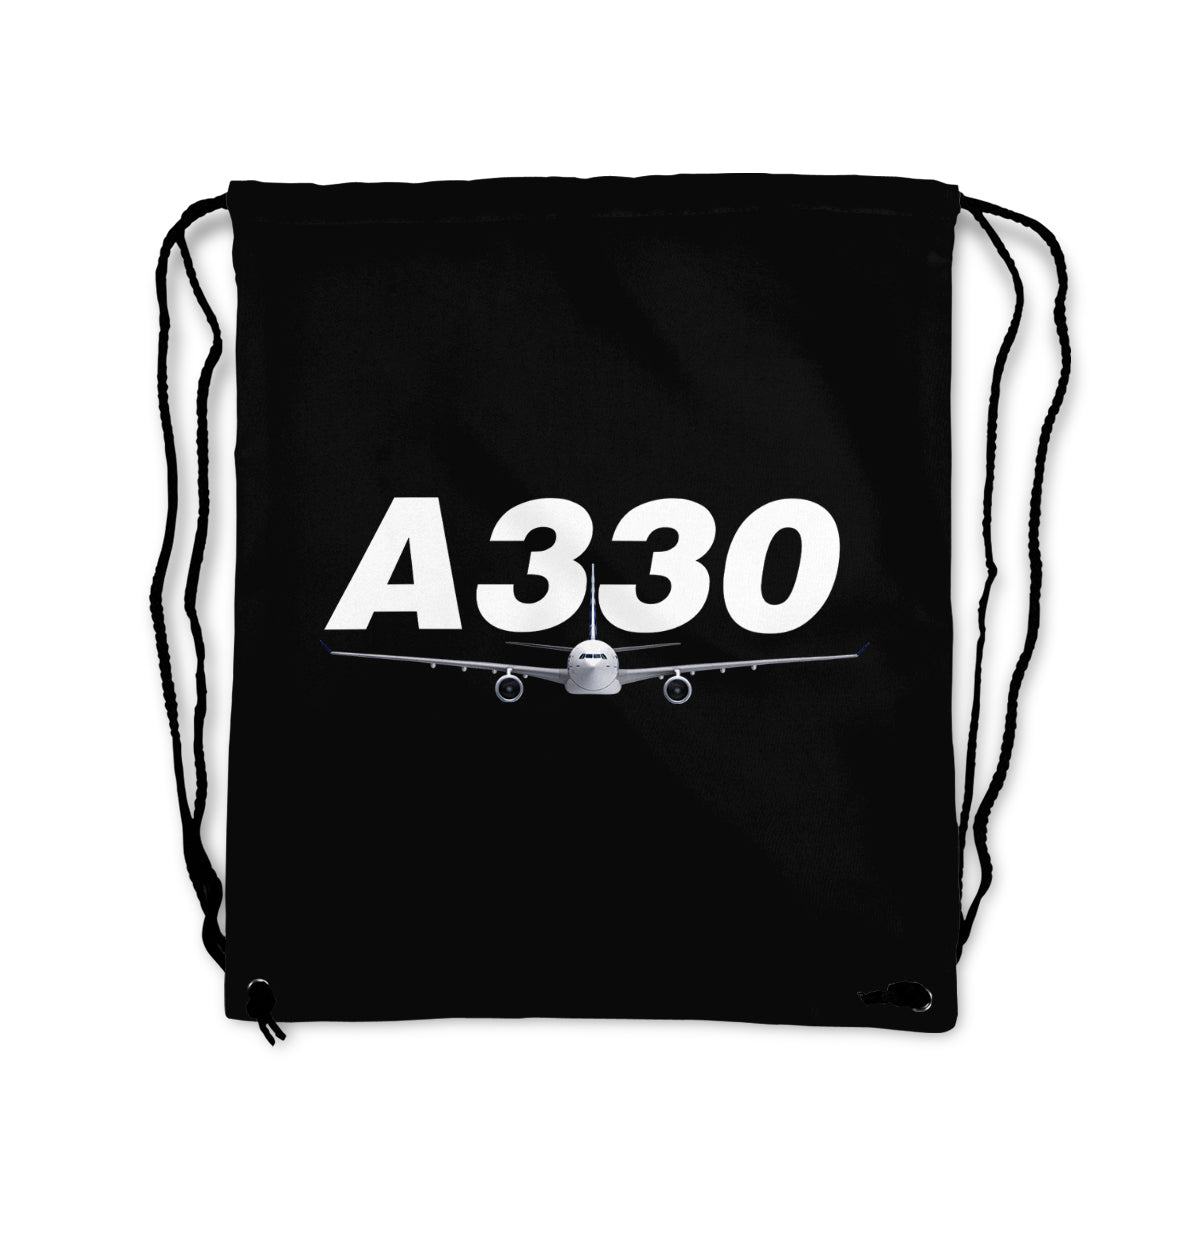 Super Airbus A330 Designed Drawstring Bags